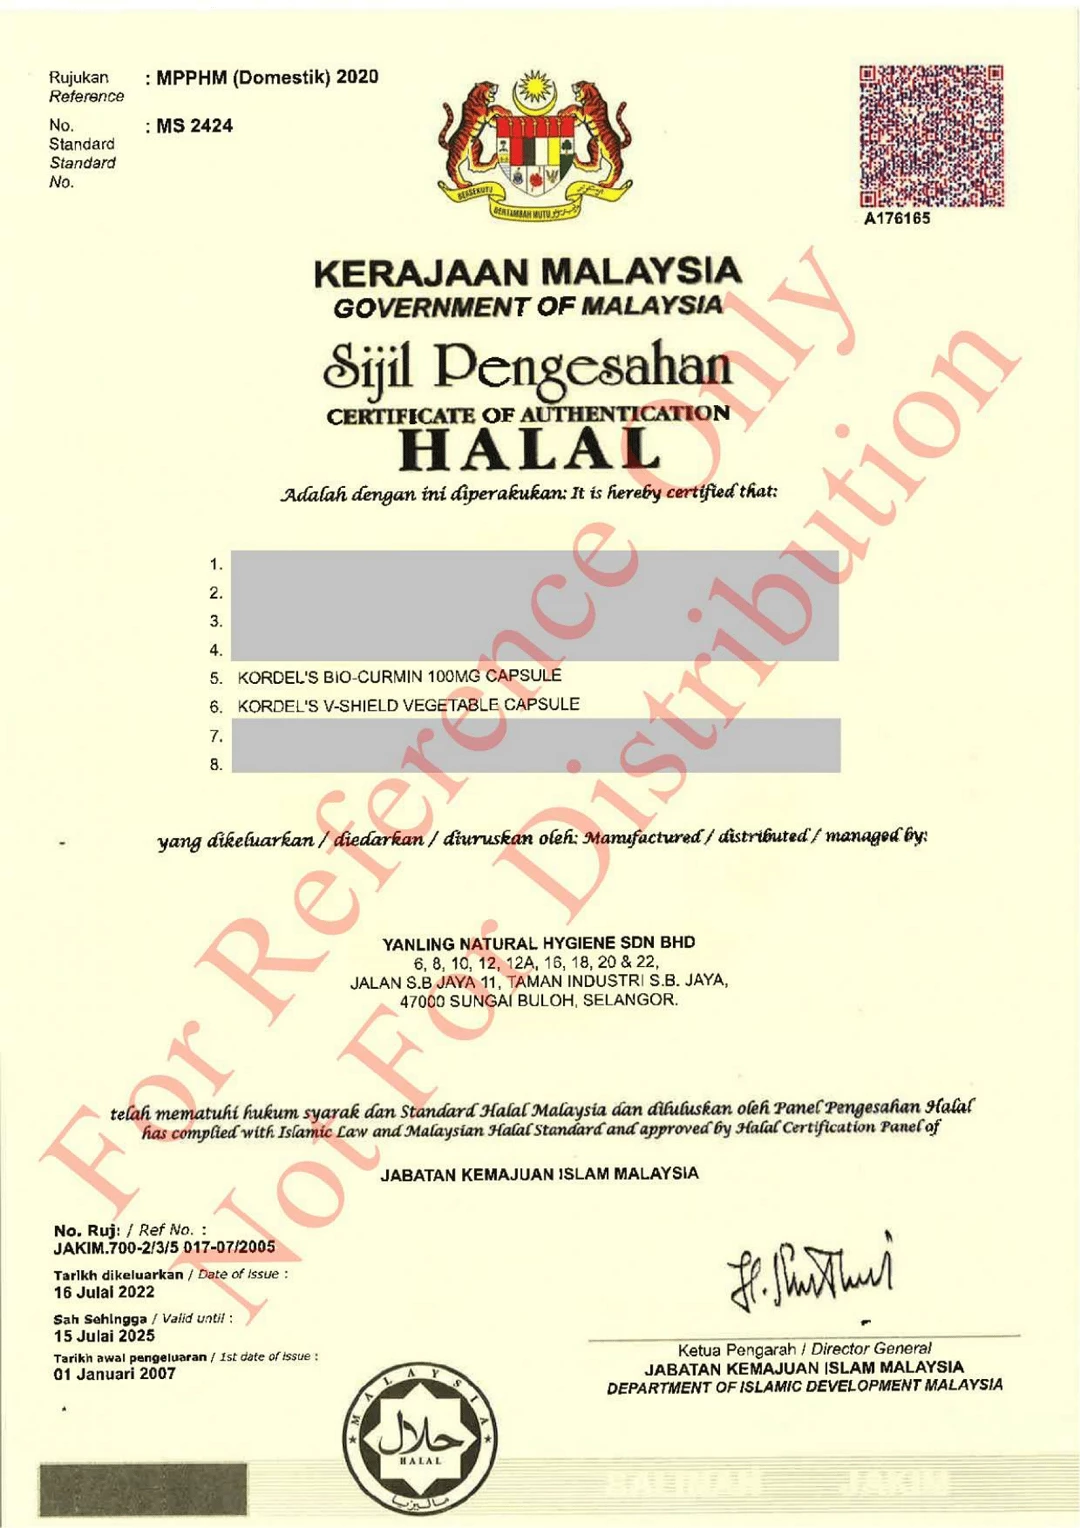 Halal Certification For Kordel's Bio-Curmin V-Shield